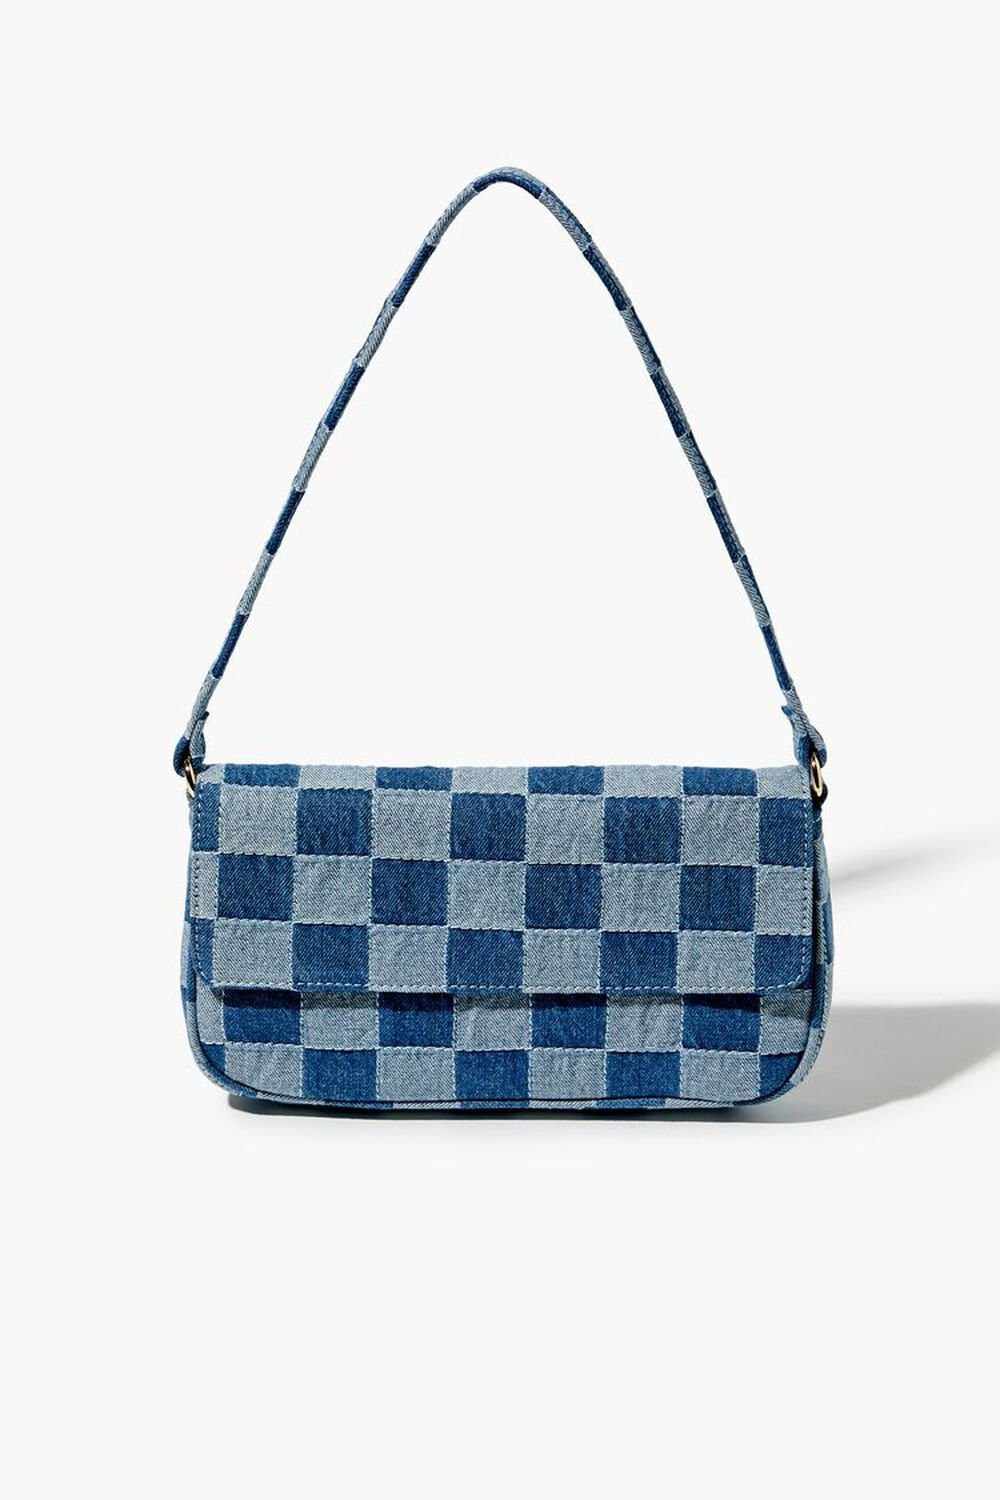 BLUE/MULTI Checkered Denim Bag, image 1